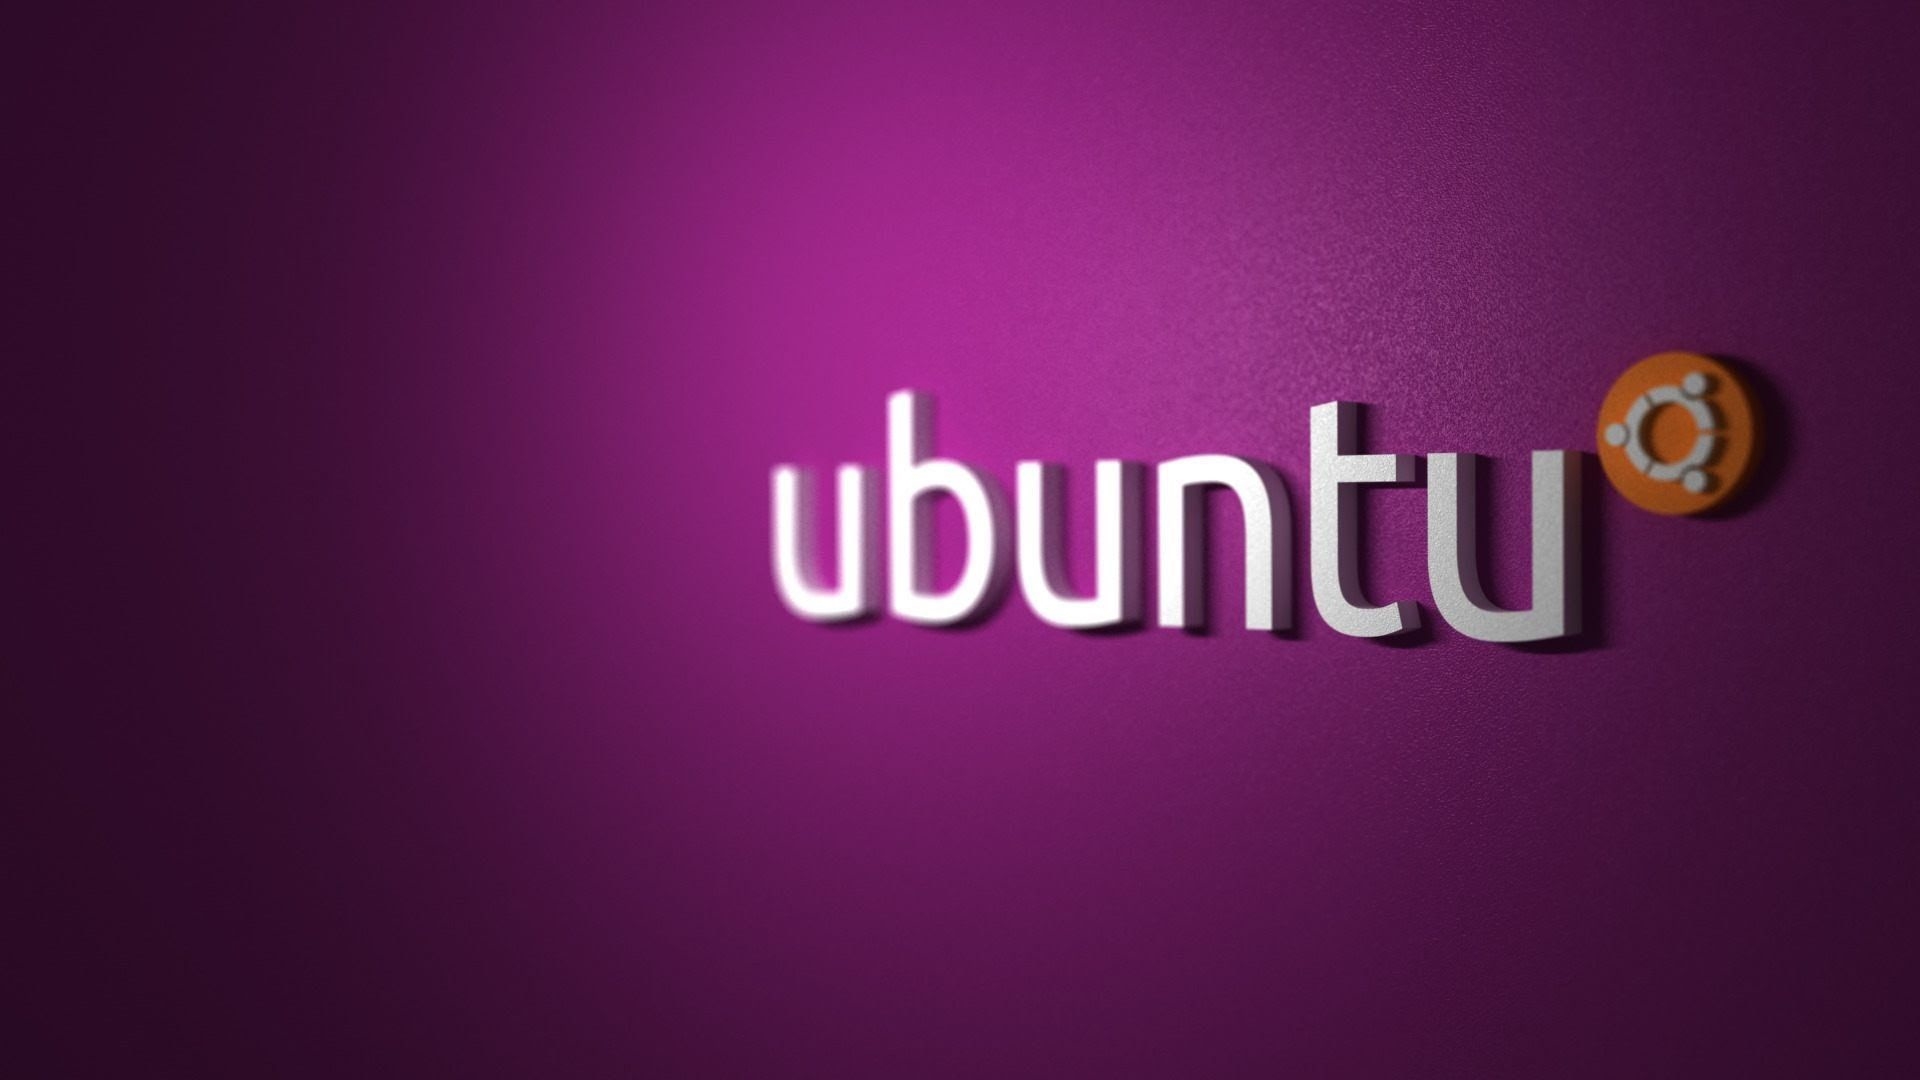 Ubuntu Wallpaper Free Download